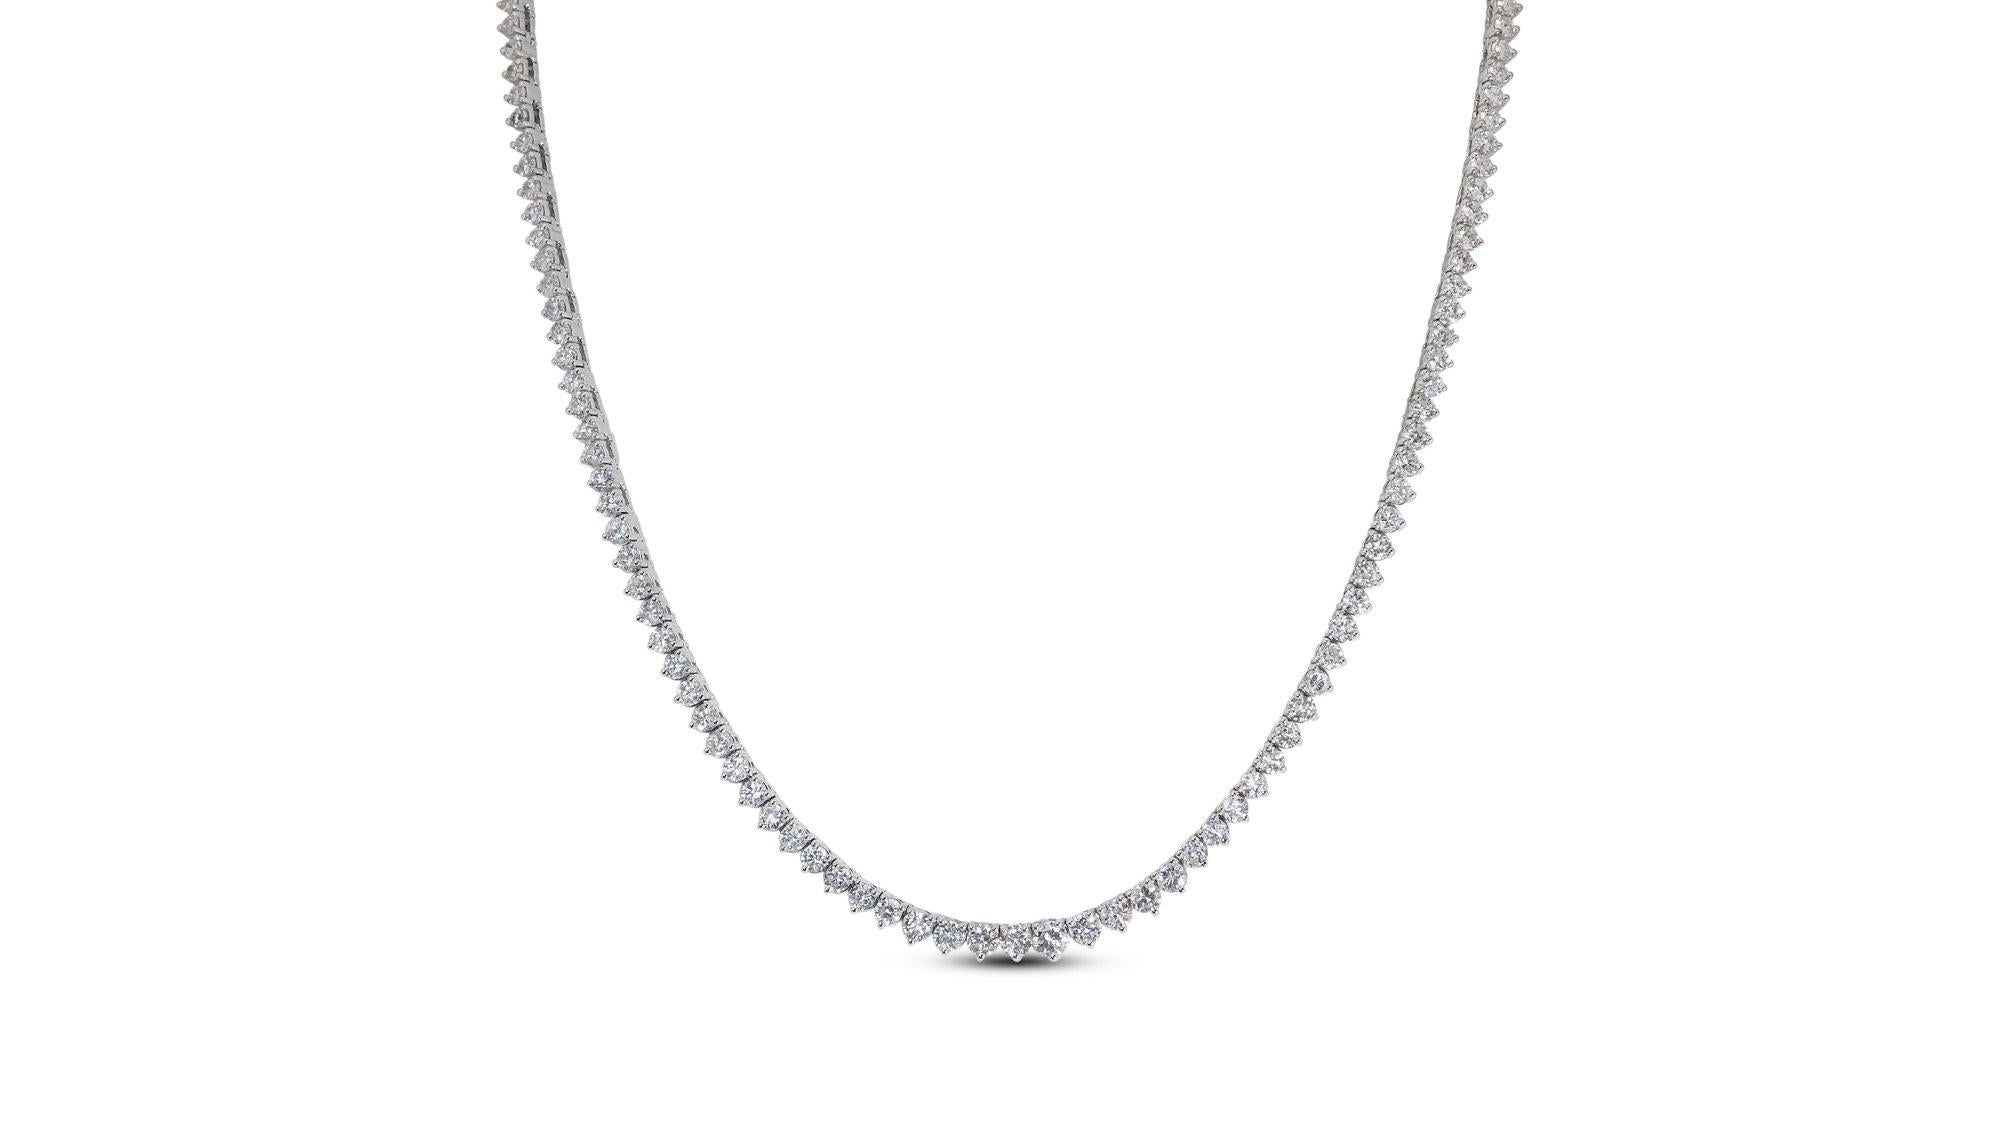 Ravishing 14k White Gold Necklace w/ 8.36 ct Natural Diamonds IGI Certificate For Sale 8